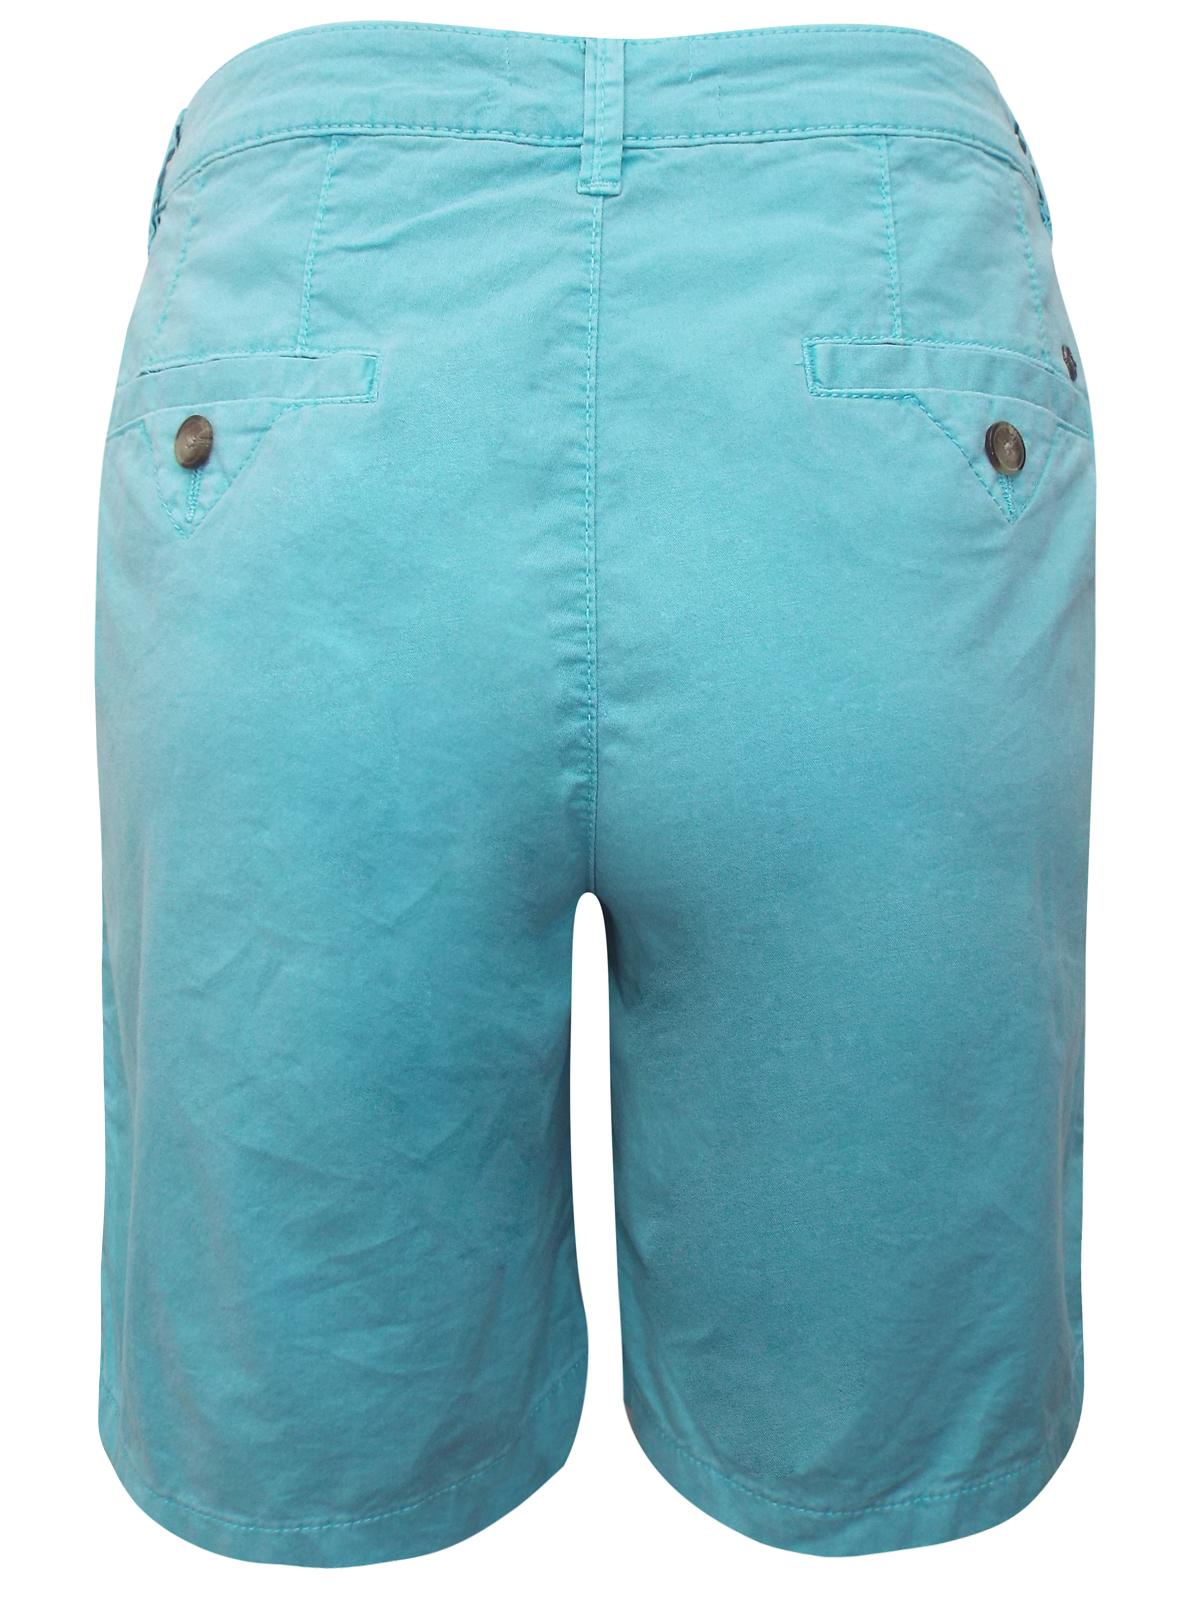 Esprit - - 3Sprit AQUA Cotton Rich Long Chino Shorts - Size 6 to 16